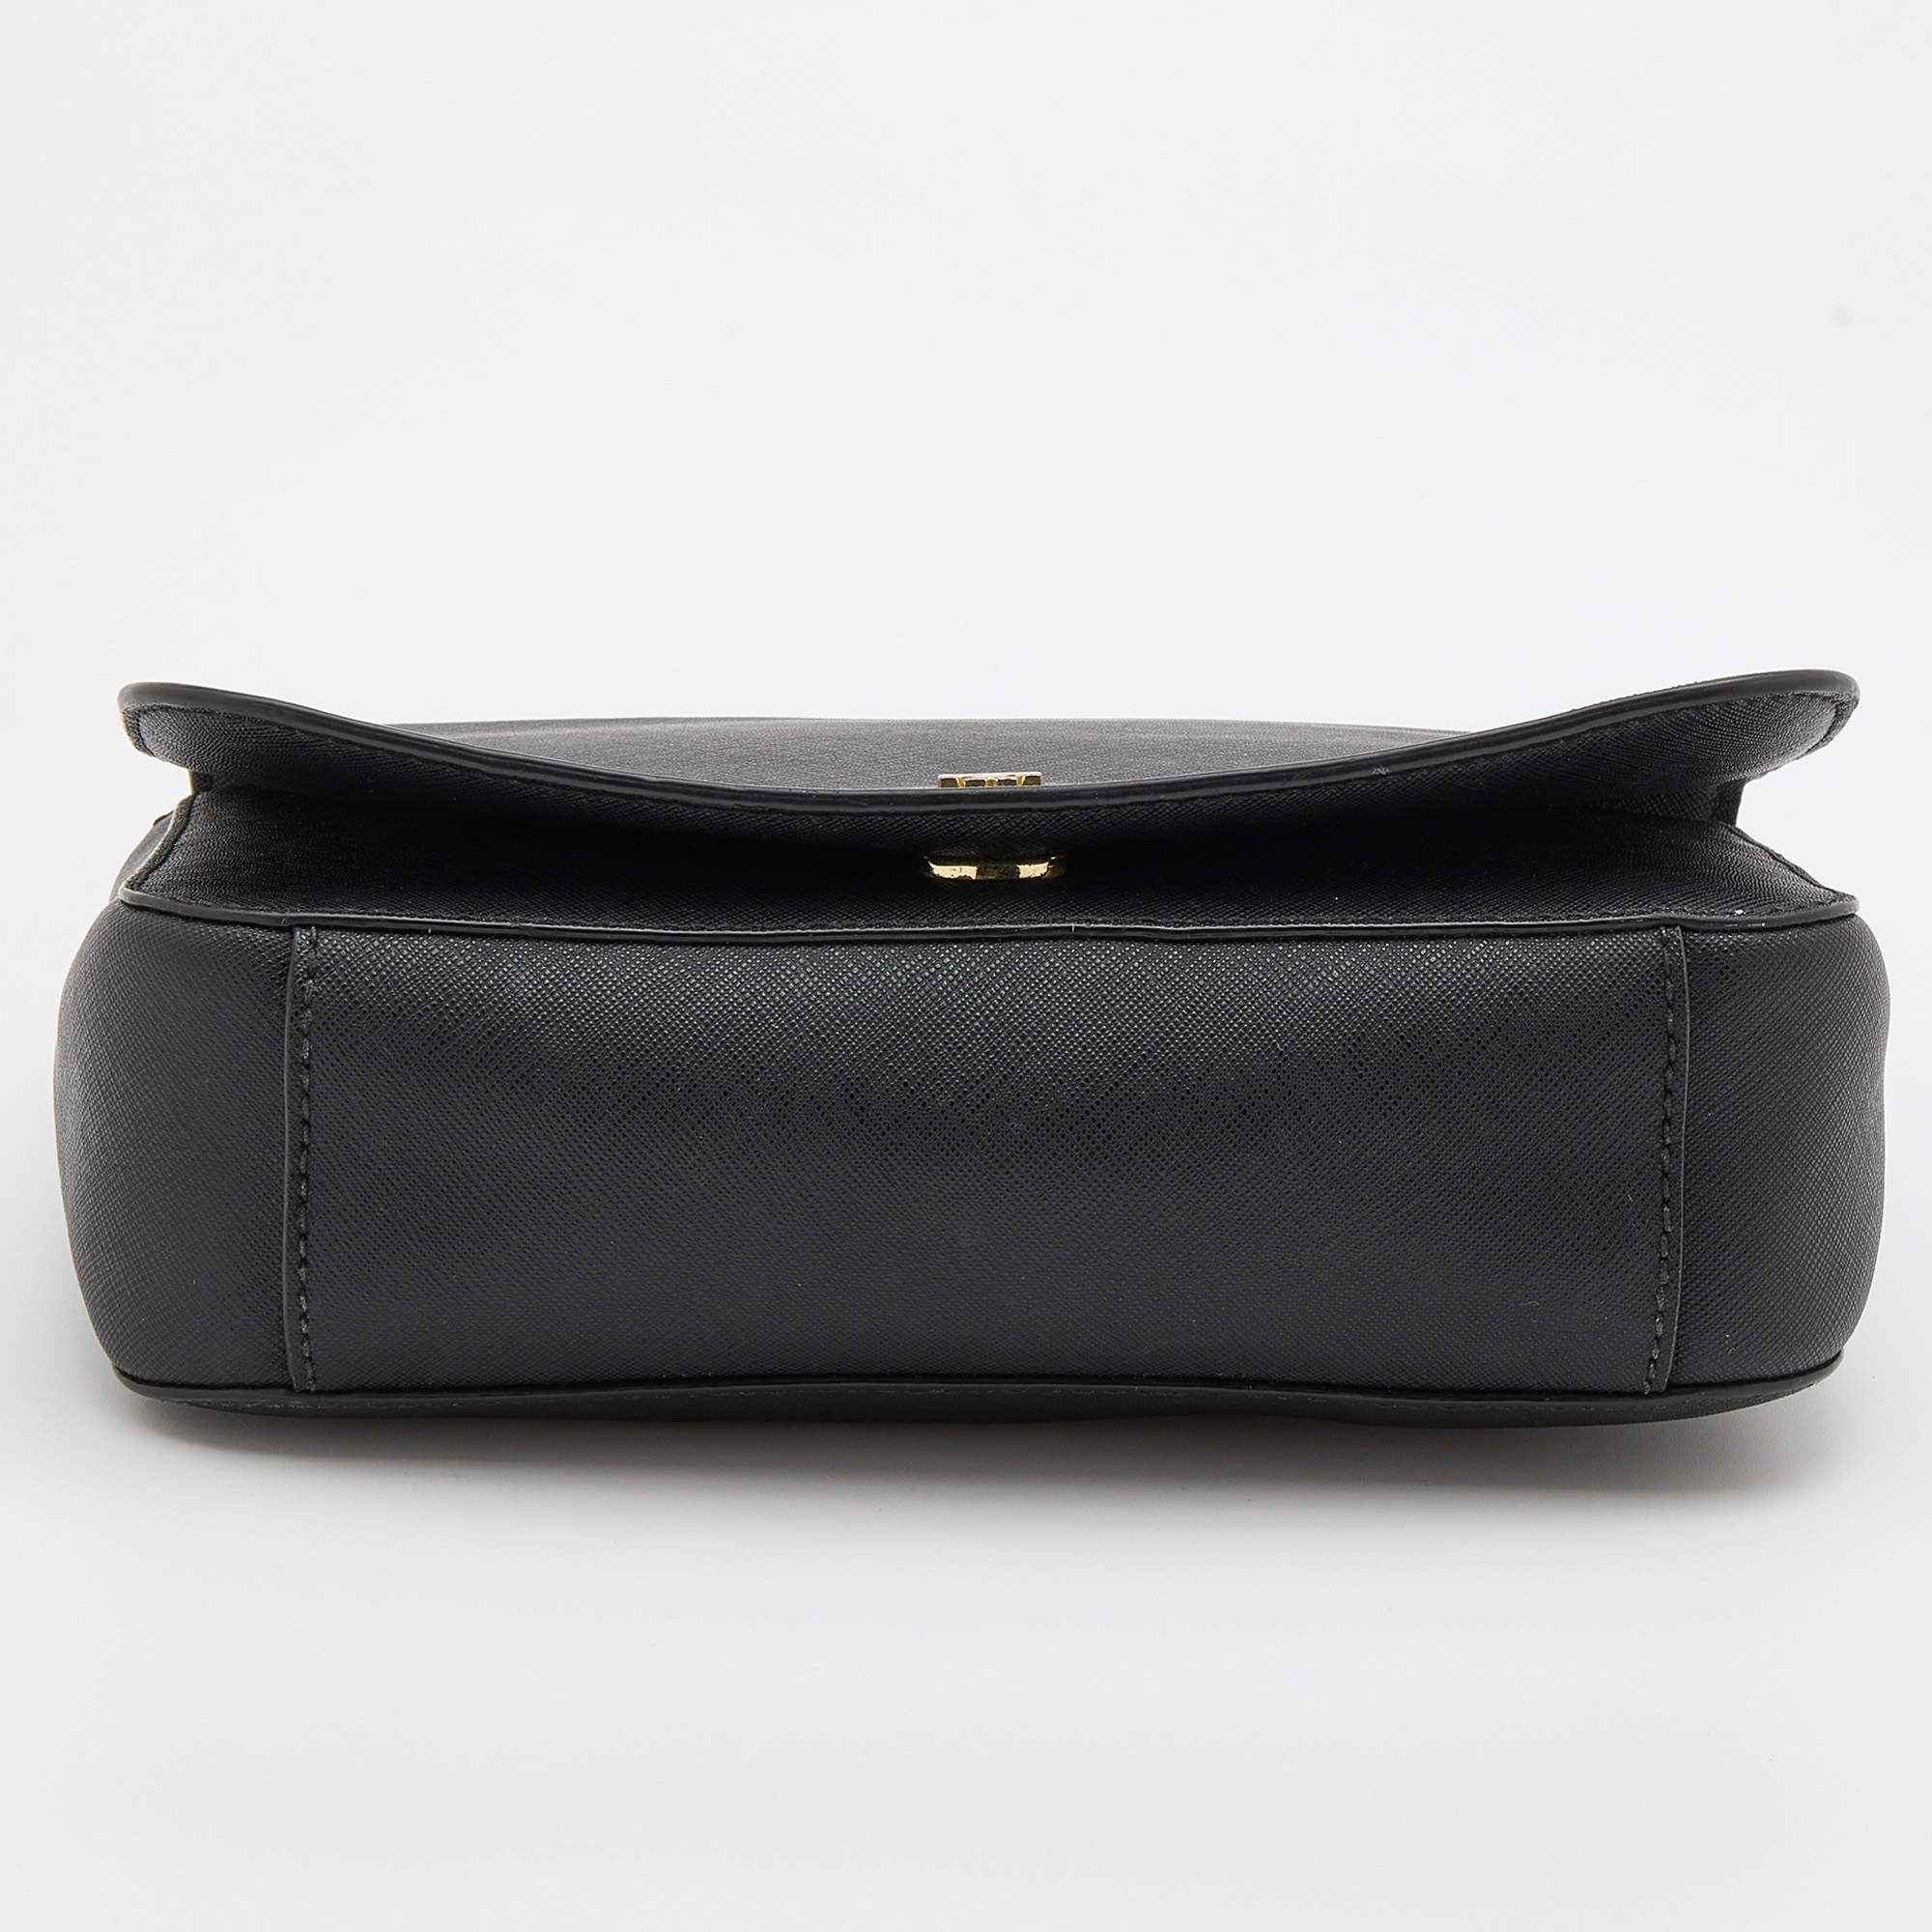 Tory Burch Saffiano Leather Top Handle Bag - Black Crossbody Bags, Handbags  - WTO572497